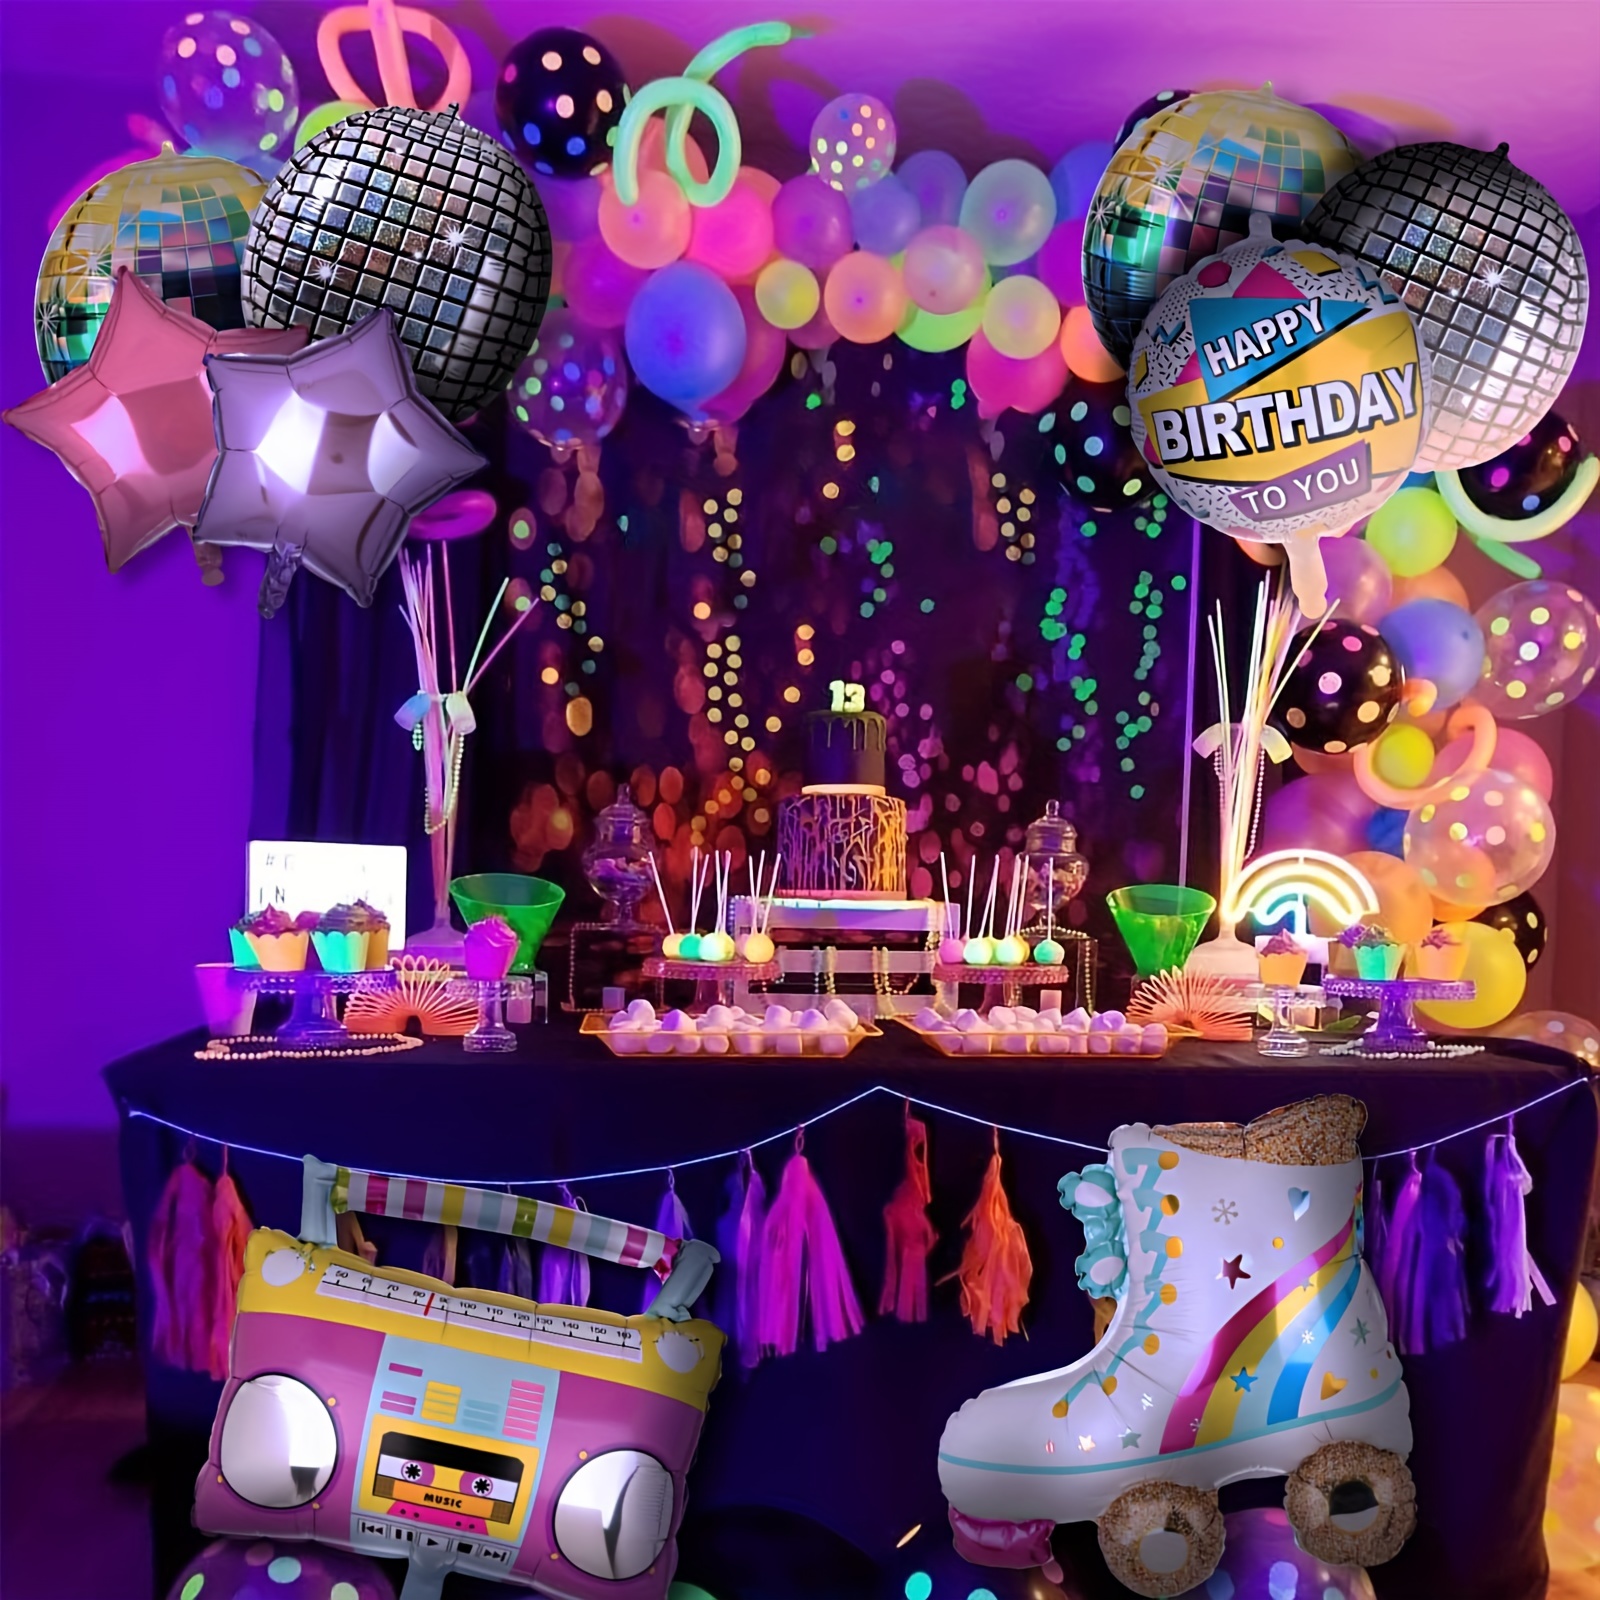 Taiahiro The new digital birthday party balloon decoration set combination.  UAE | Dubai, Abu Dhabi